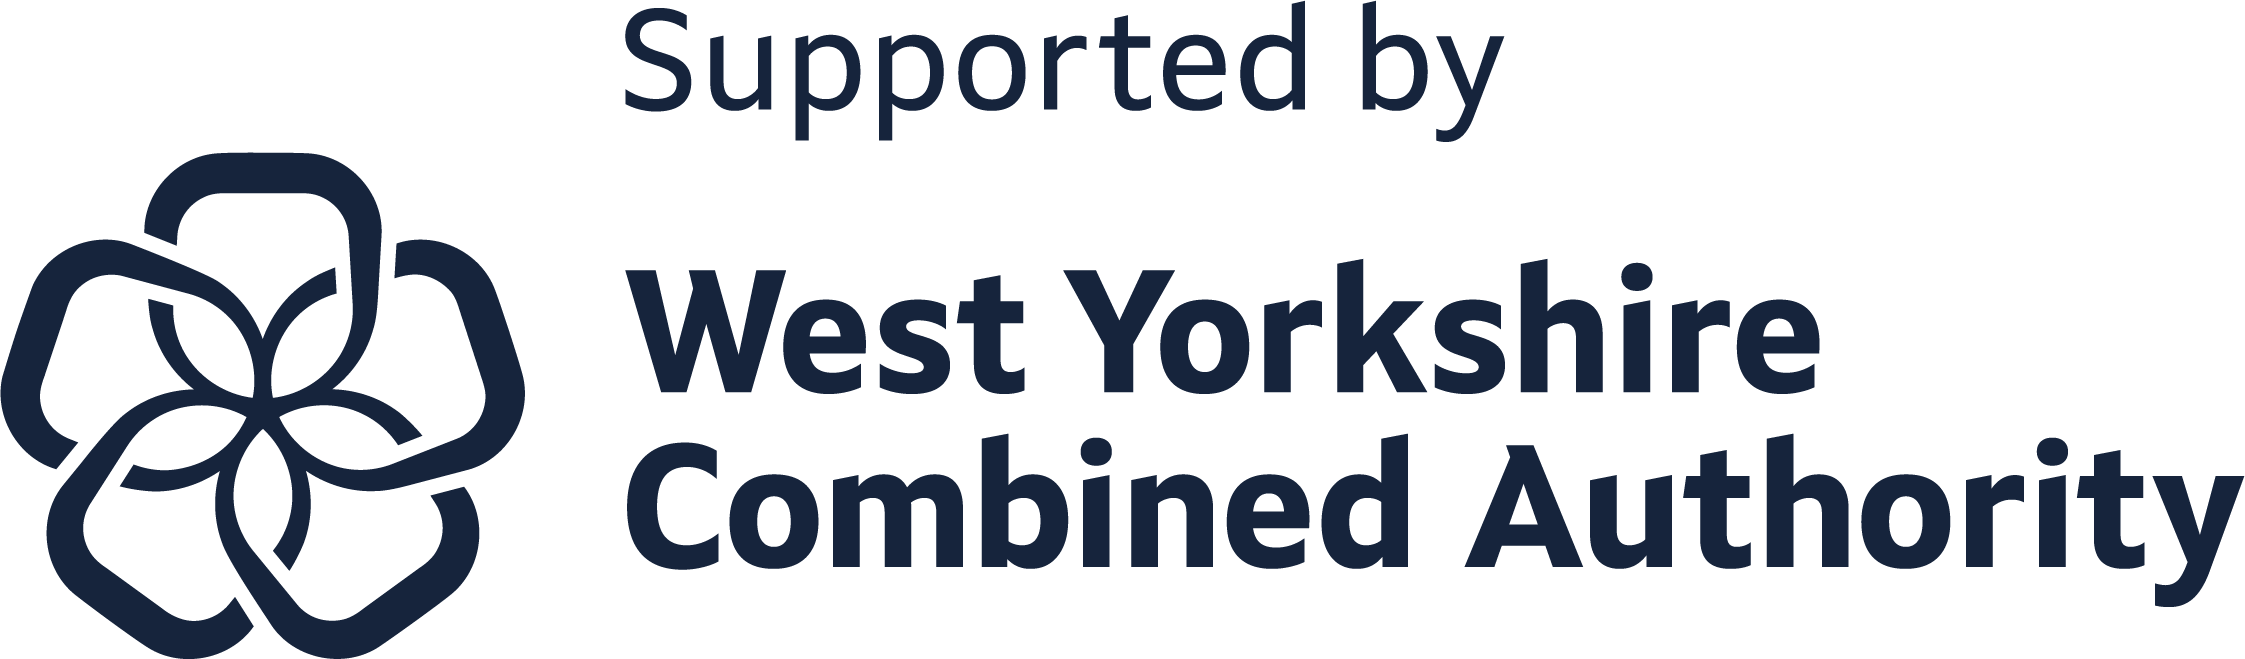 West Yorkshire Combined Authority logo